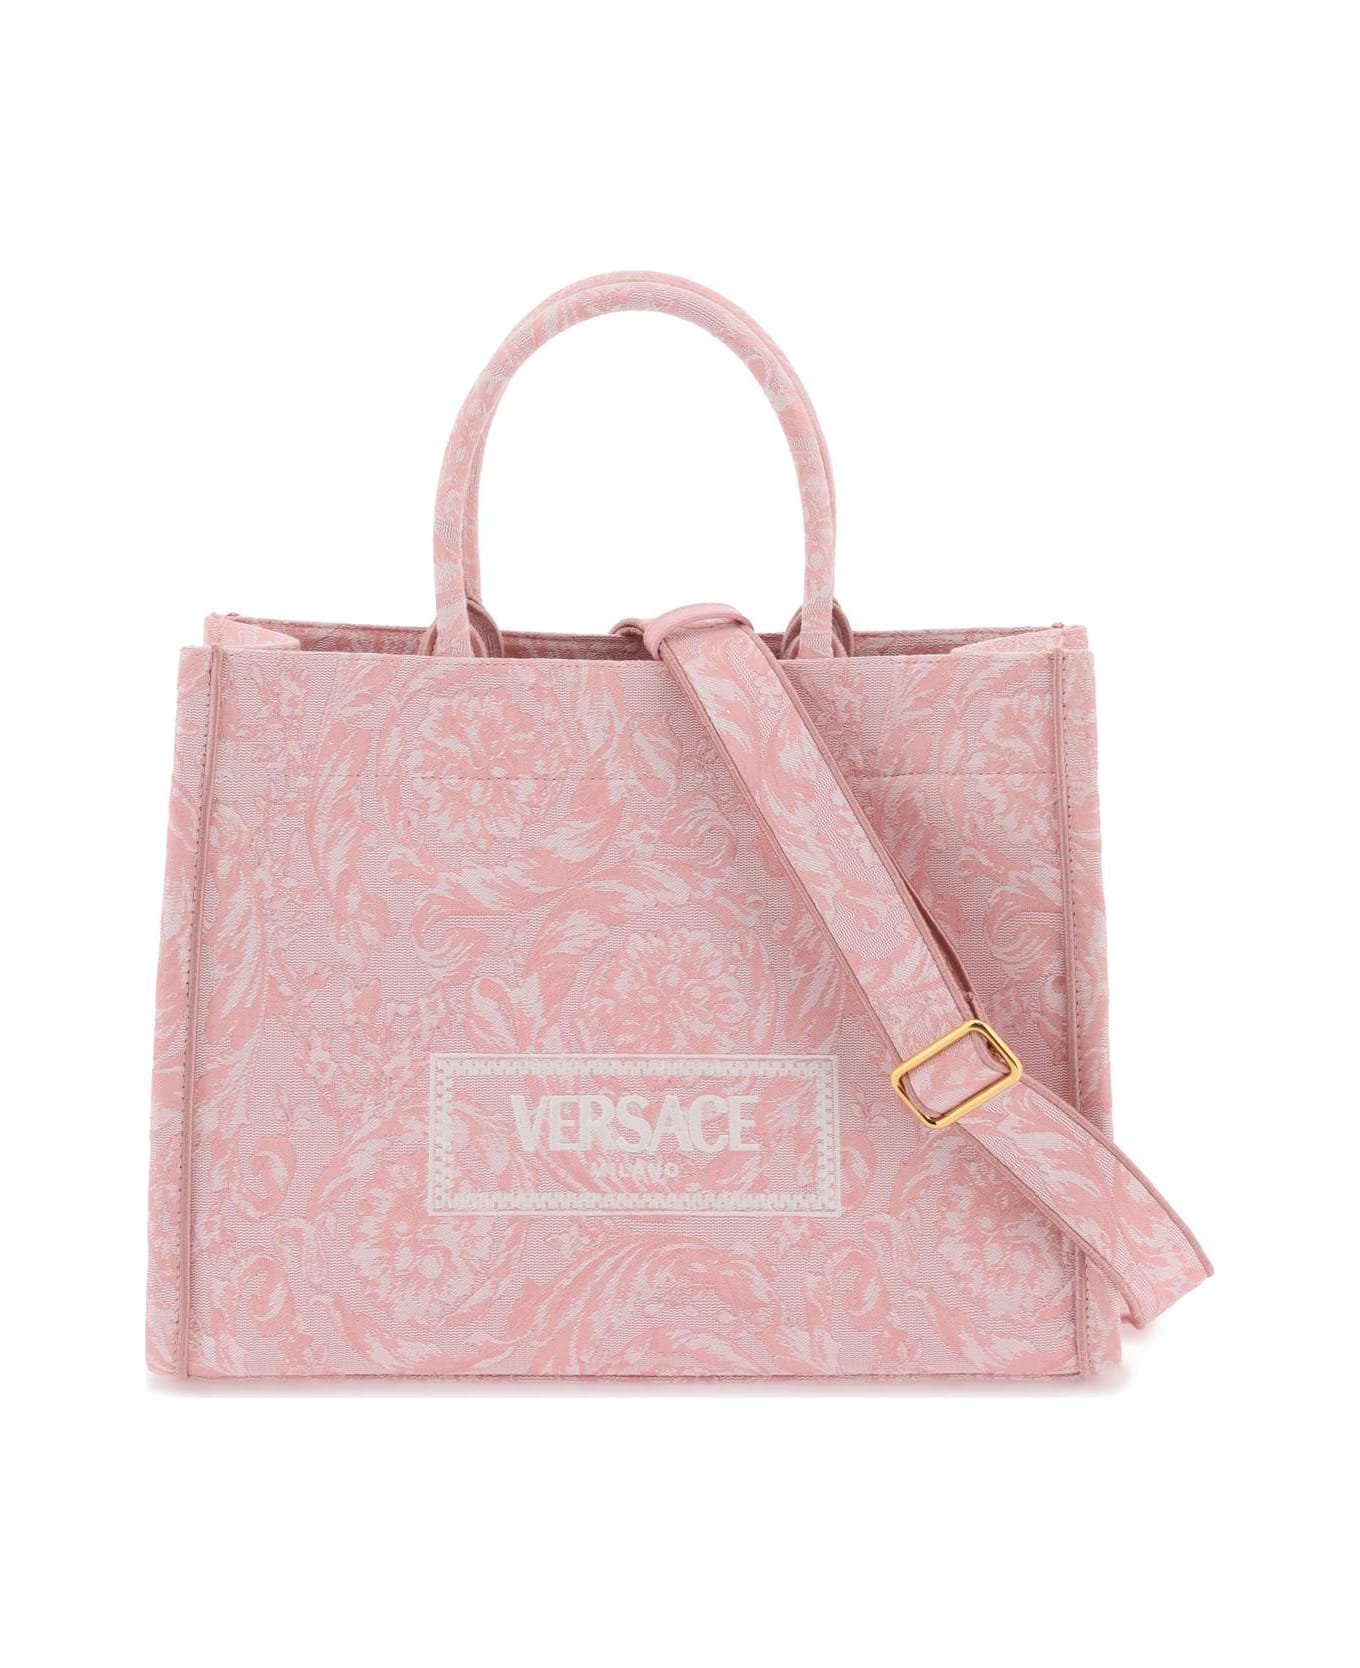 Versace Athena Handbag - Givenchy medium Whip shoulder bag